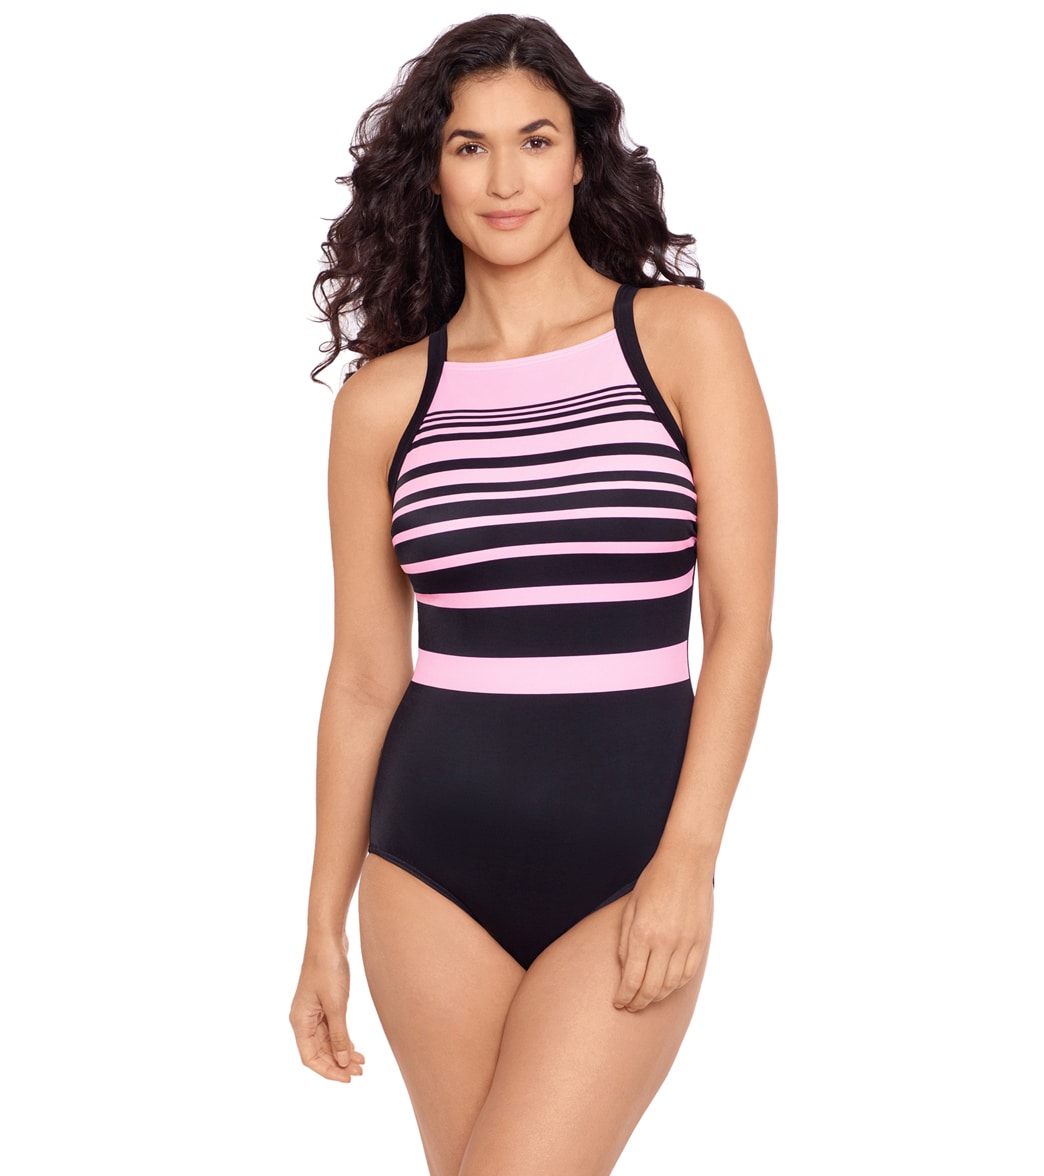 Reebok Women's Insta Stripe High Neck Chlorine Resistant One Piece Swimsuit - Black/Pink 14 - Swimoutlet.com